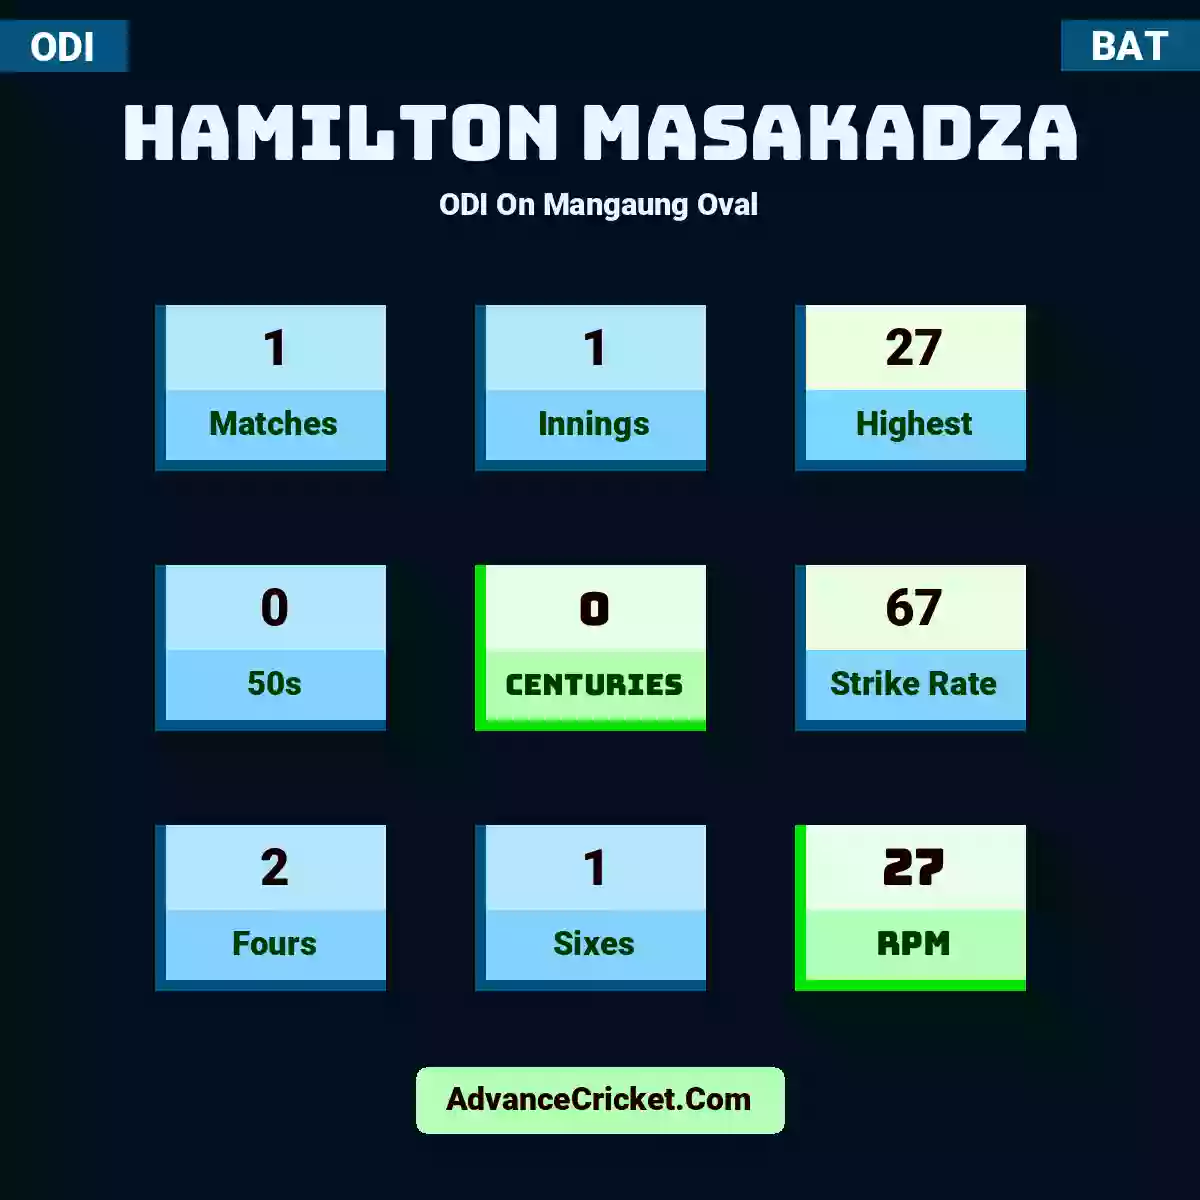 Hamilton Masakadza ODI  On Mangaung Oval, Hamilton Masakadza played 1 matches, scored 27 runs as highest, 0 half-centuries, and 0 centuries, with a strike rate of 67. H.Masakadza hit 2 fours and 1 sixes, with an RPM of 27.